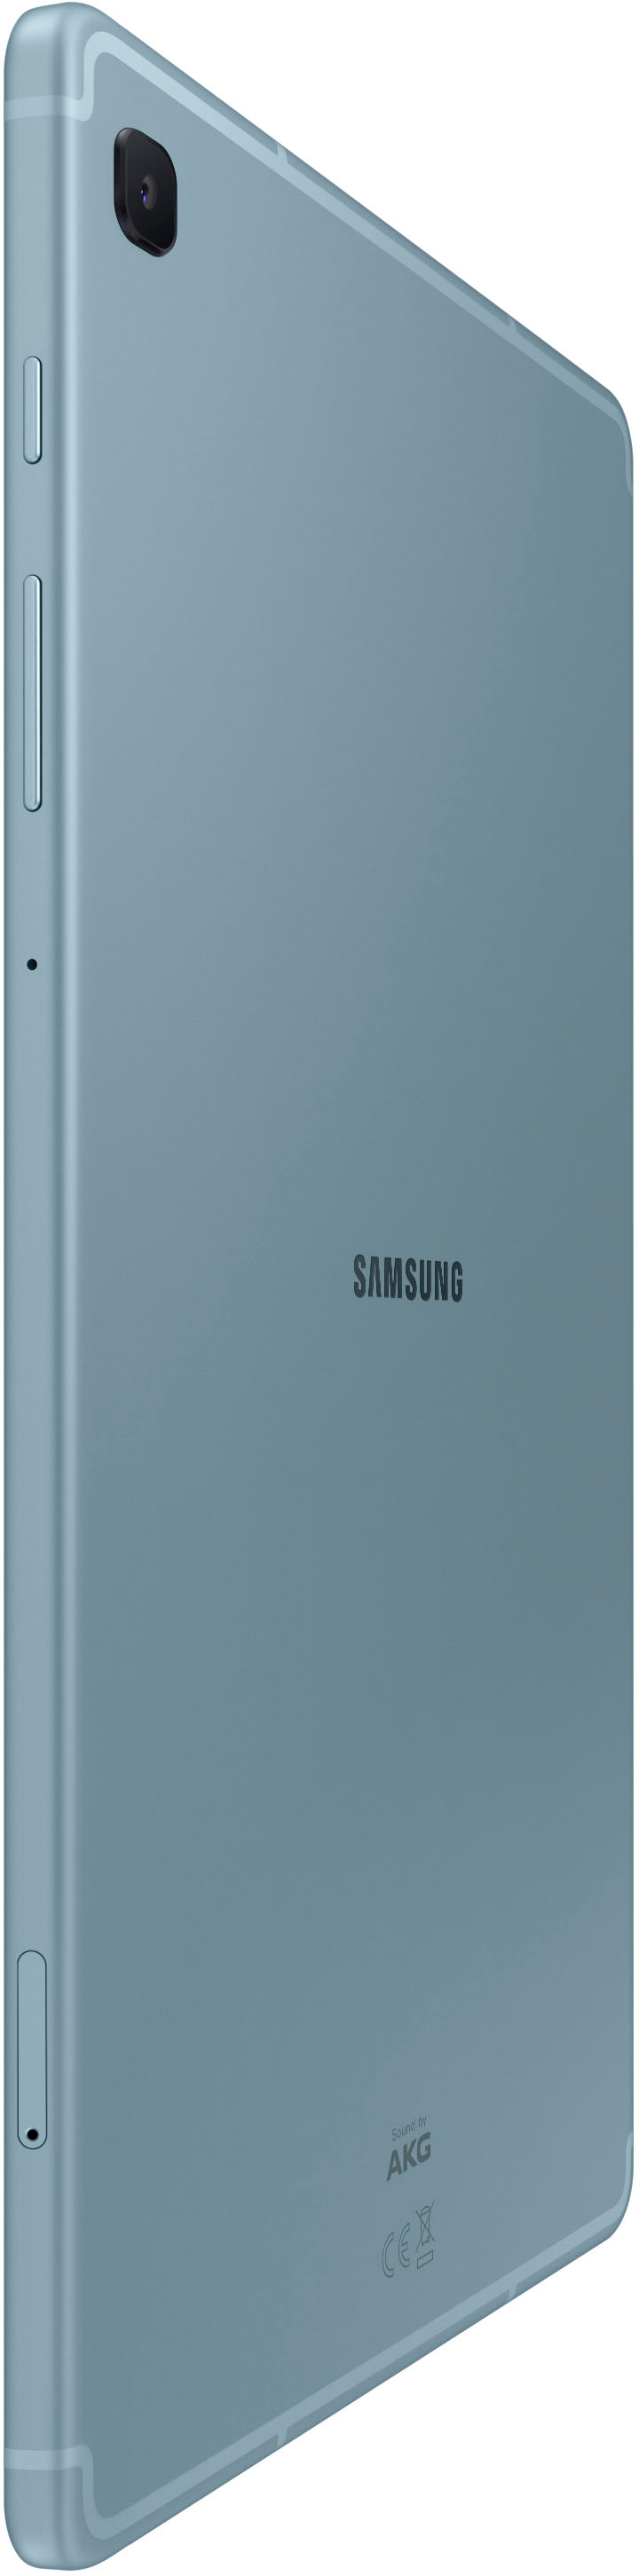 SAMSUNG Galaxy Tab S6 Lite Wi-Fi Android Tablet with Stylus (10.4 Inch, 4GB  RAM, 128GB ROM, Angora Blue)